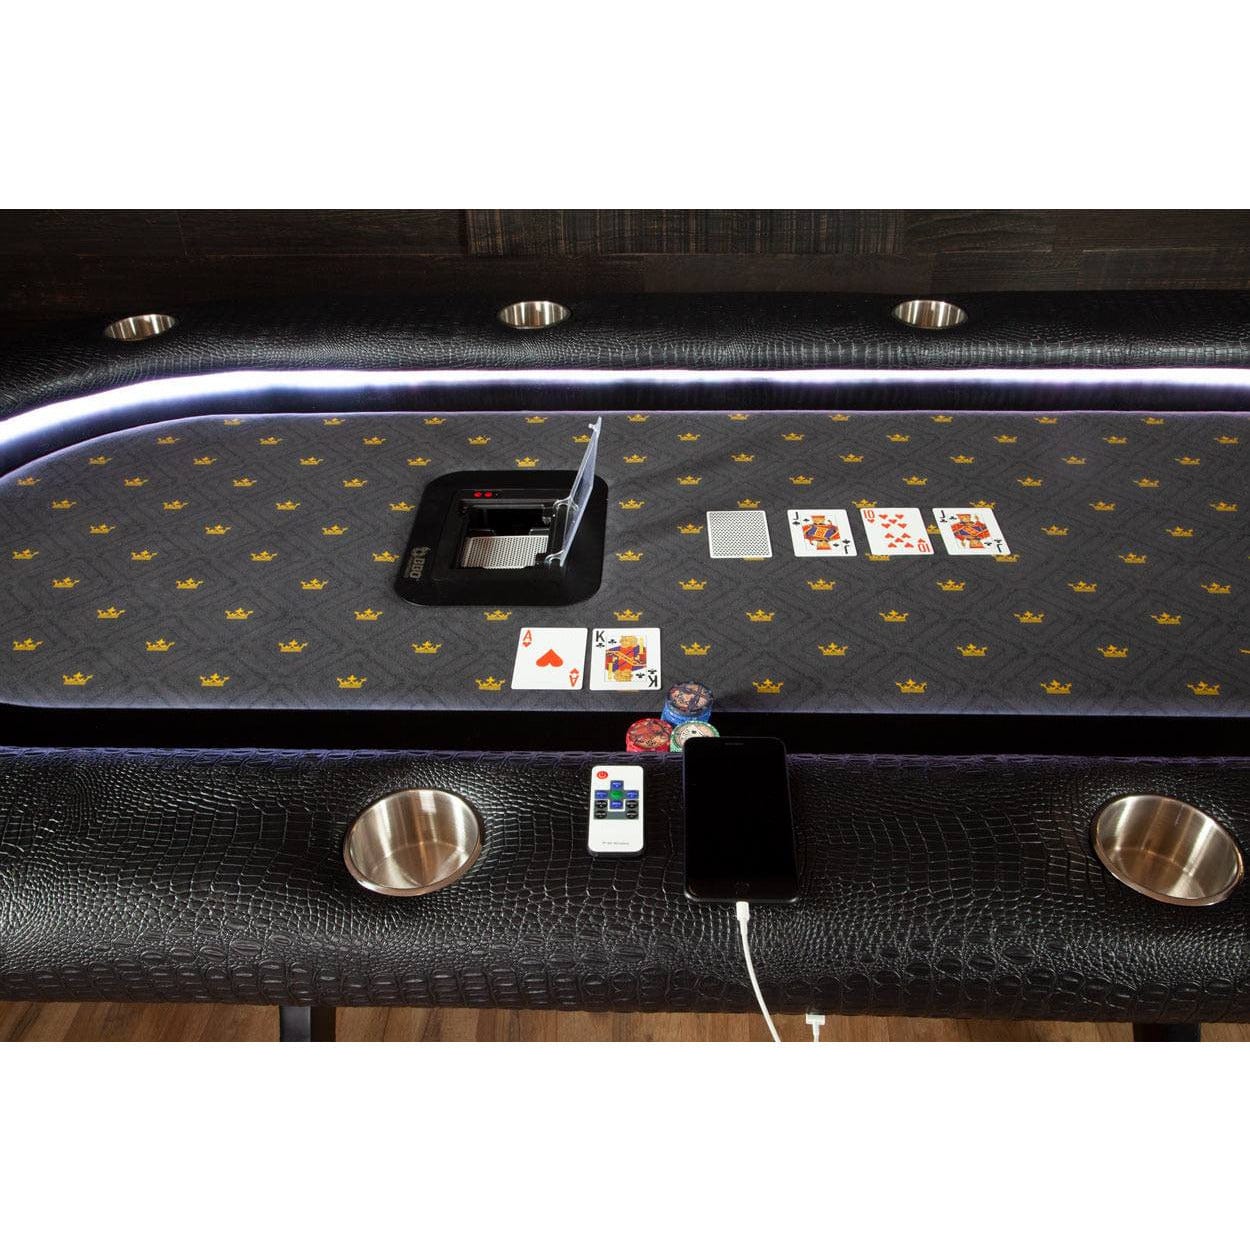 BBO Poker Tables In Table Card Shuffler Installation (SKUBBO-CSIS)